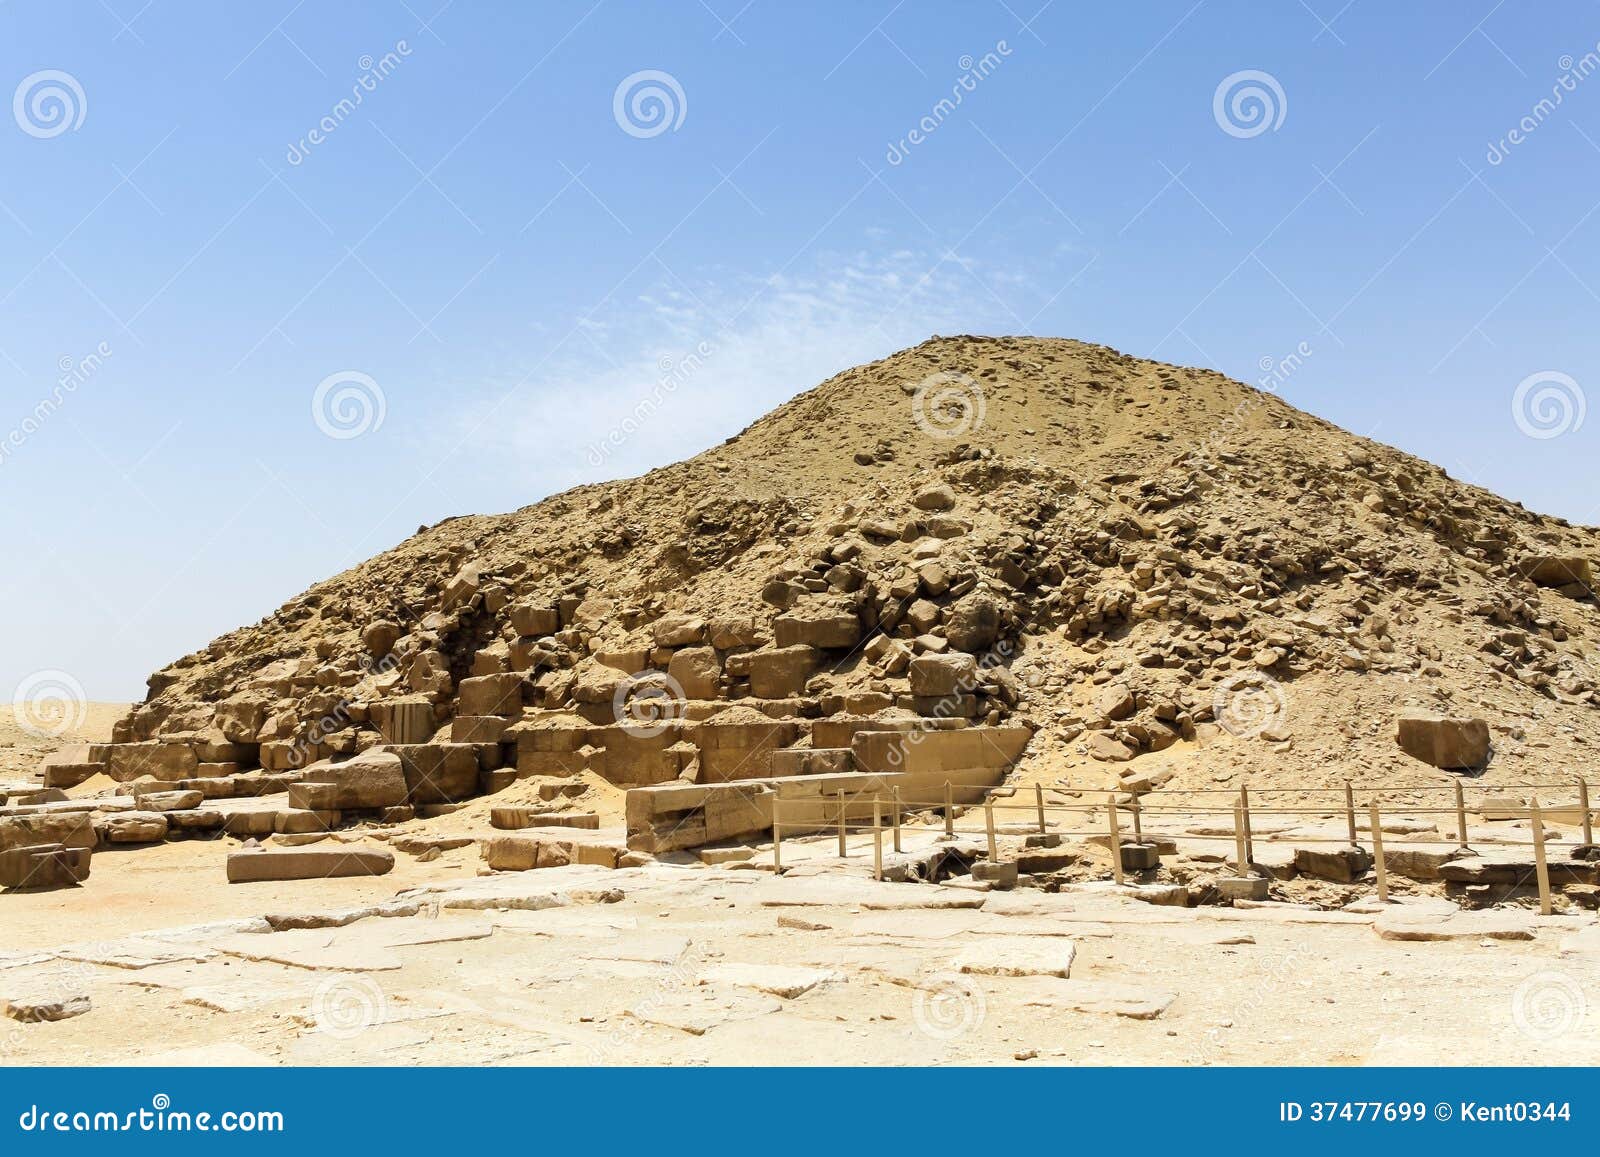 pyramid of unas, egypt